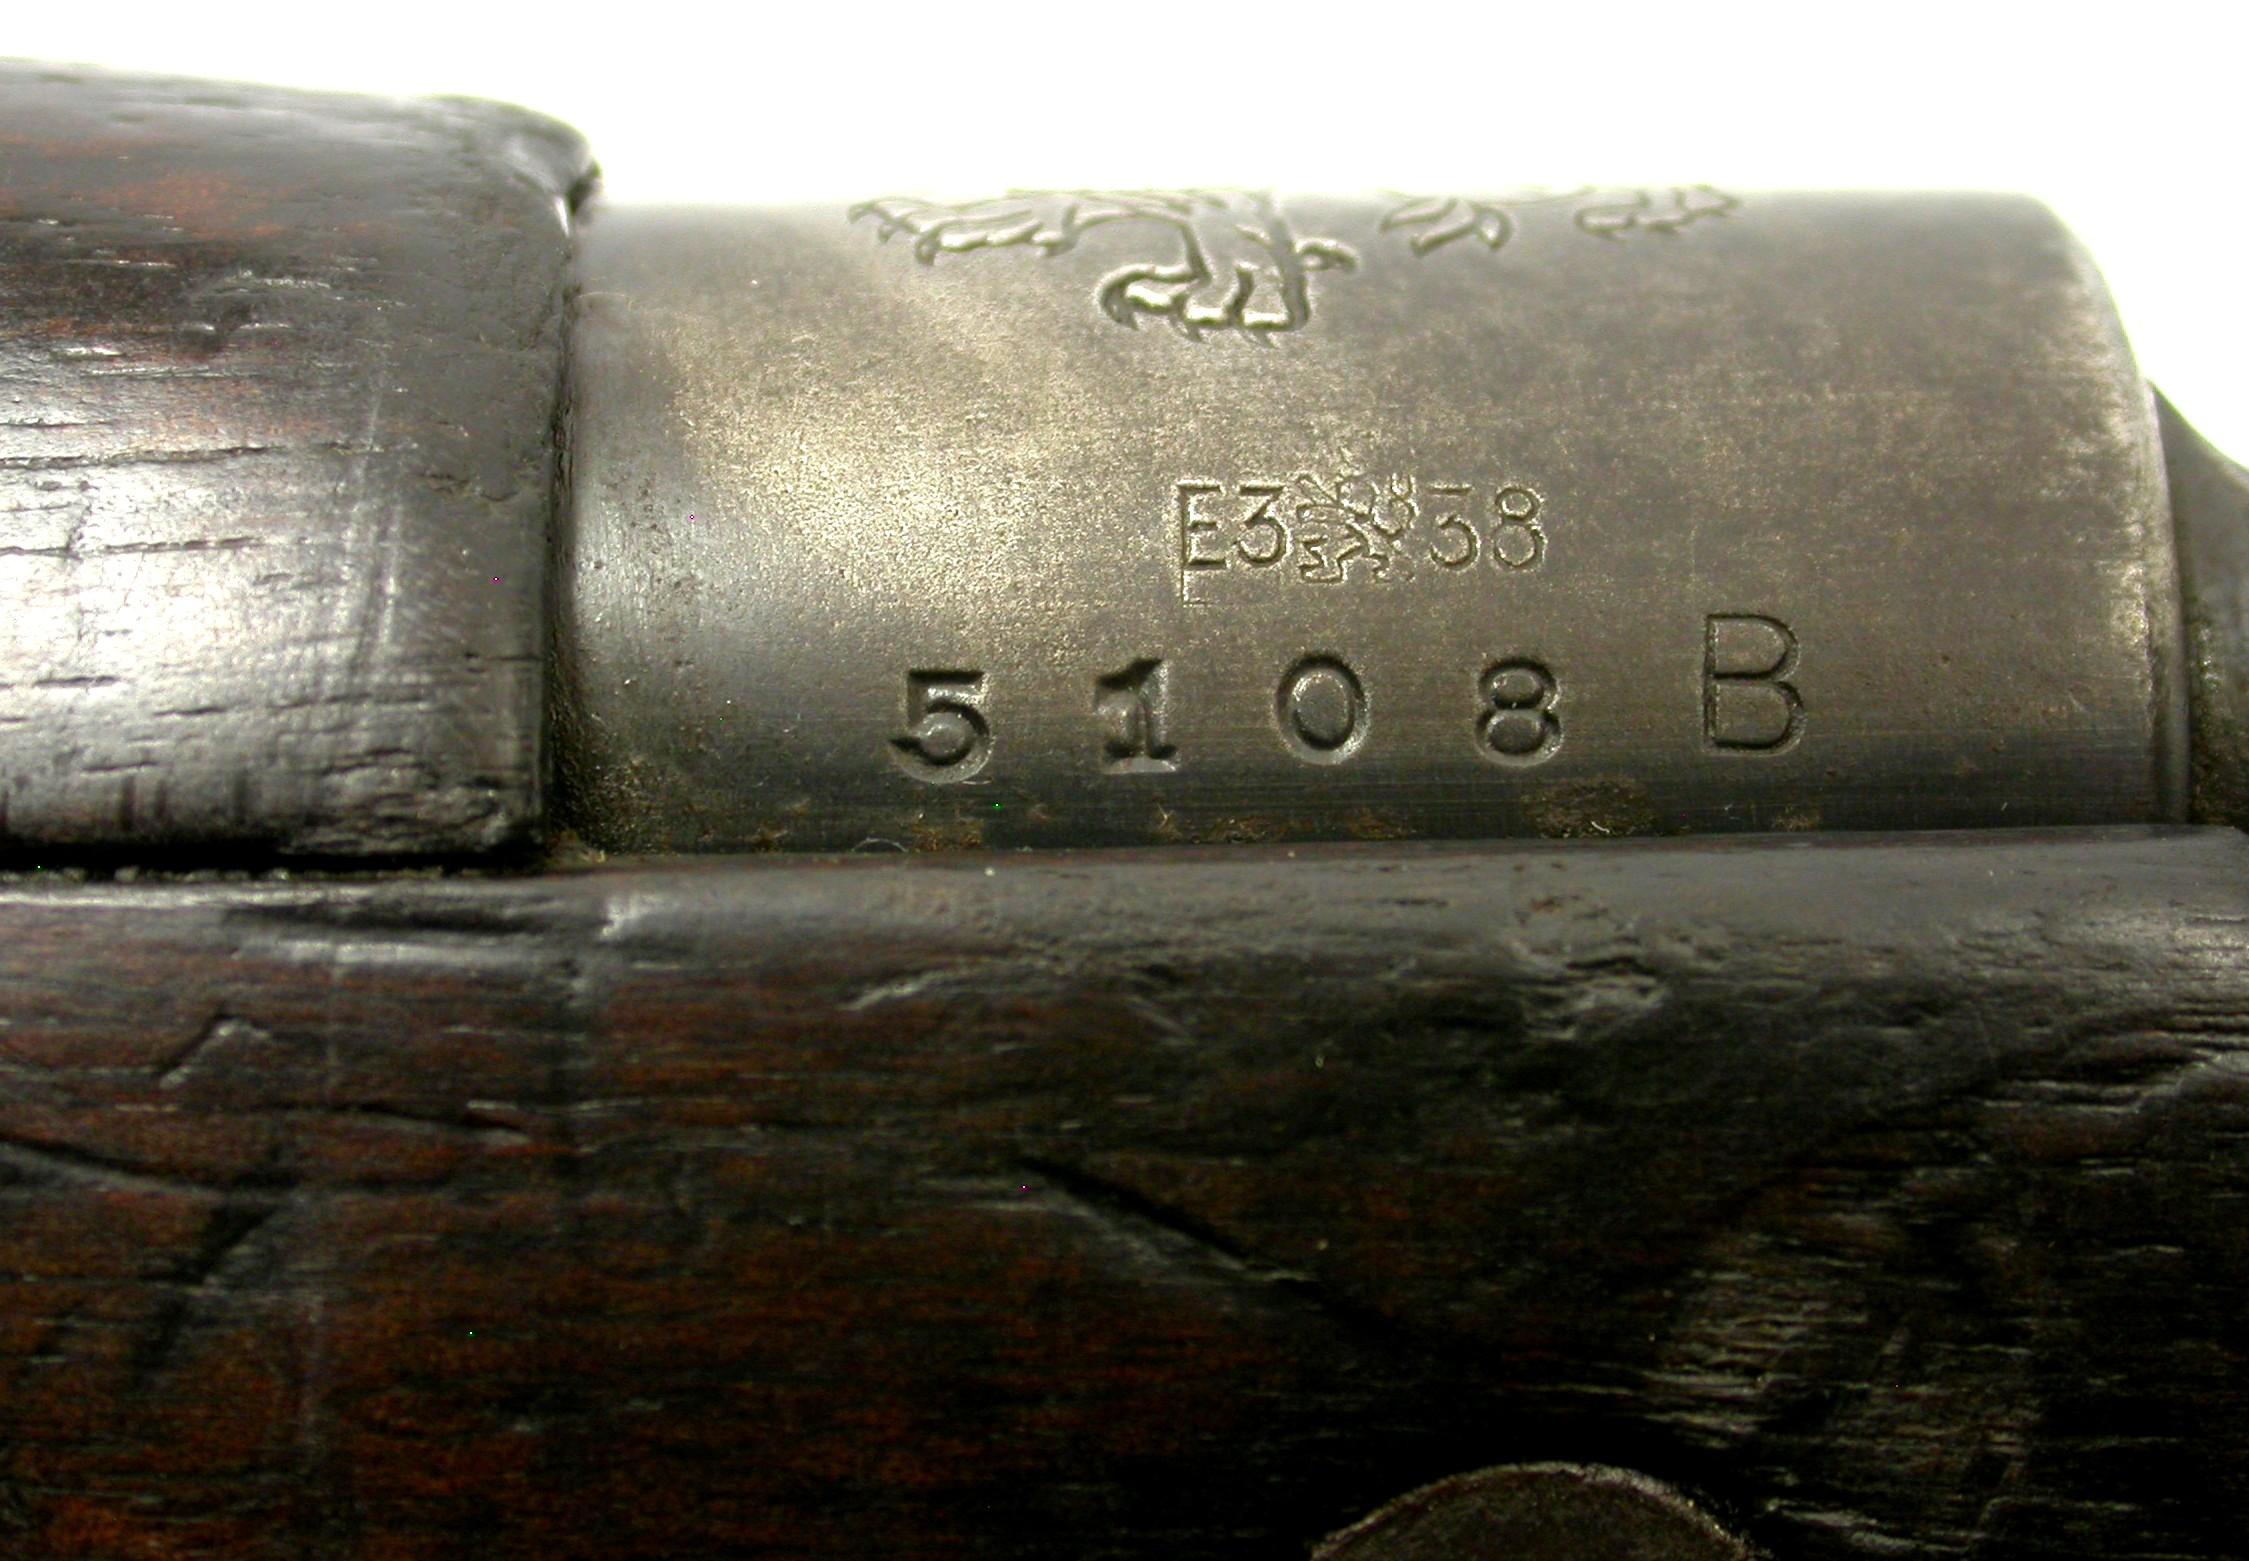 Czech Military VZ-33 8mm Bolt-Action Mauser Carbine - FFL 5108B (MBP1)